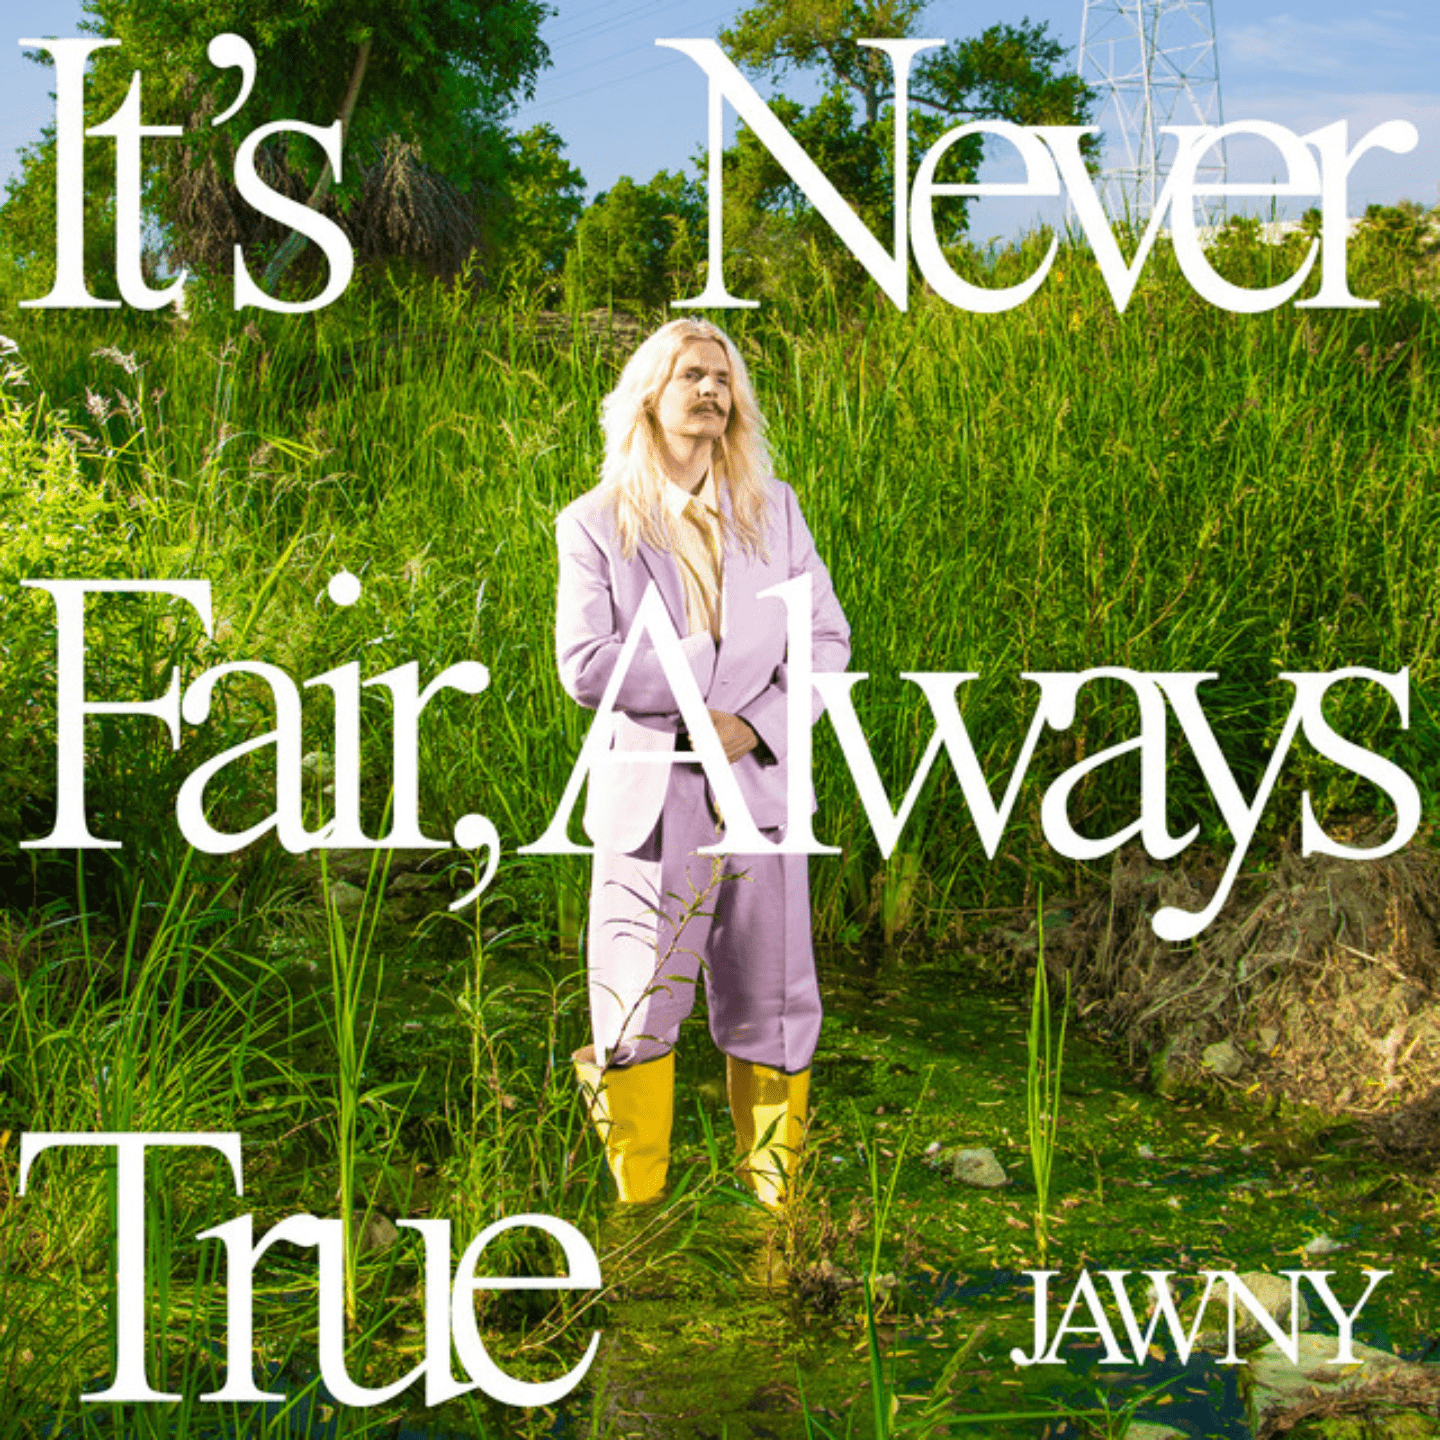 JAWNY - Its Never Fair, Always True LP Green vinyl